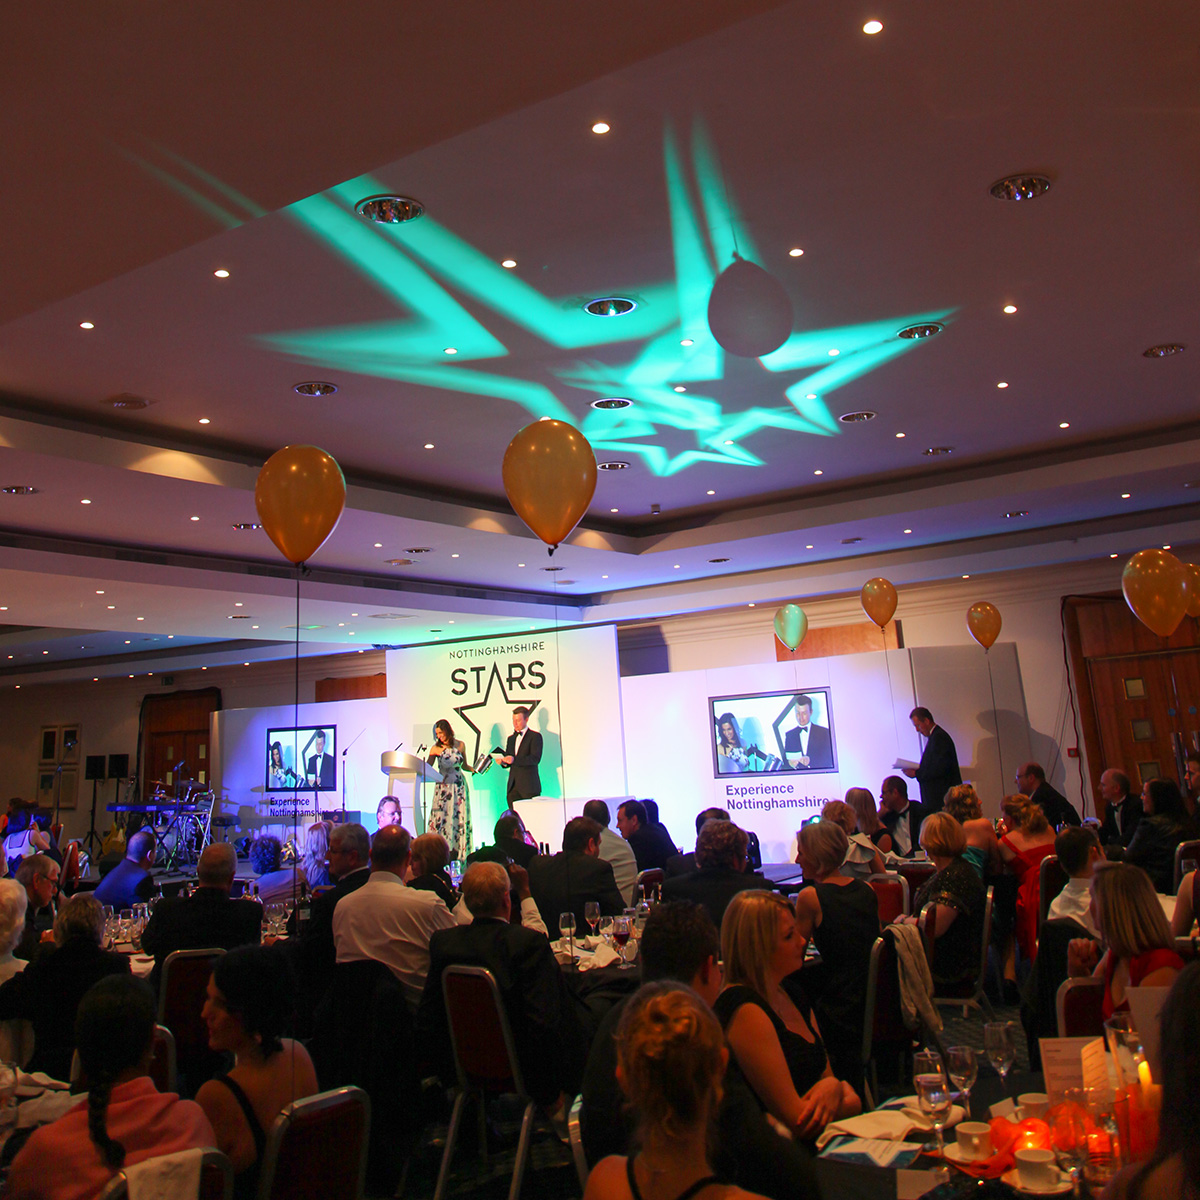 Experience Nottinghamshire Stars Awards event